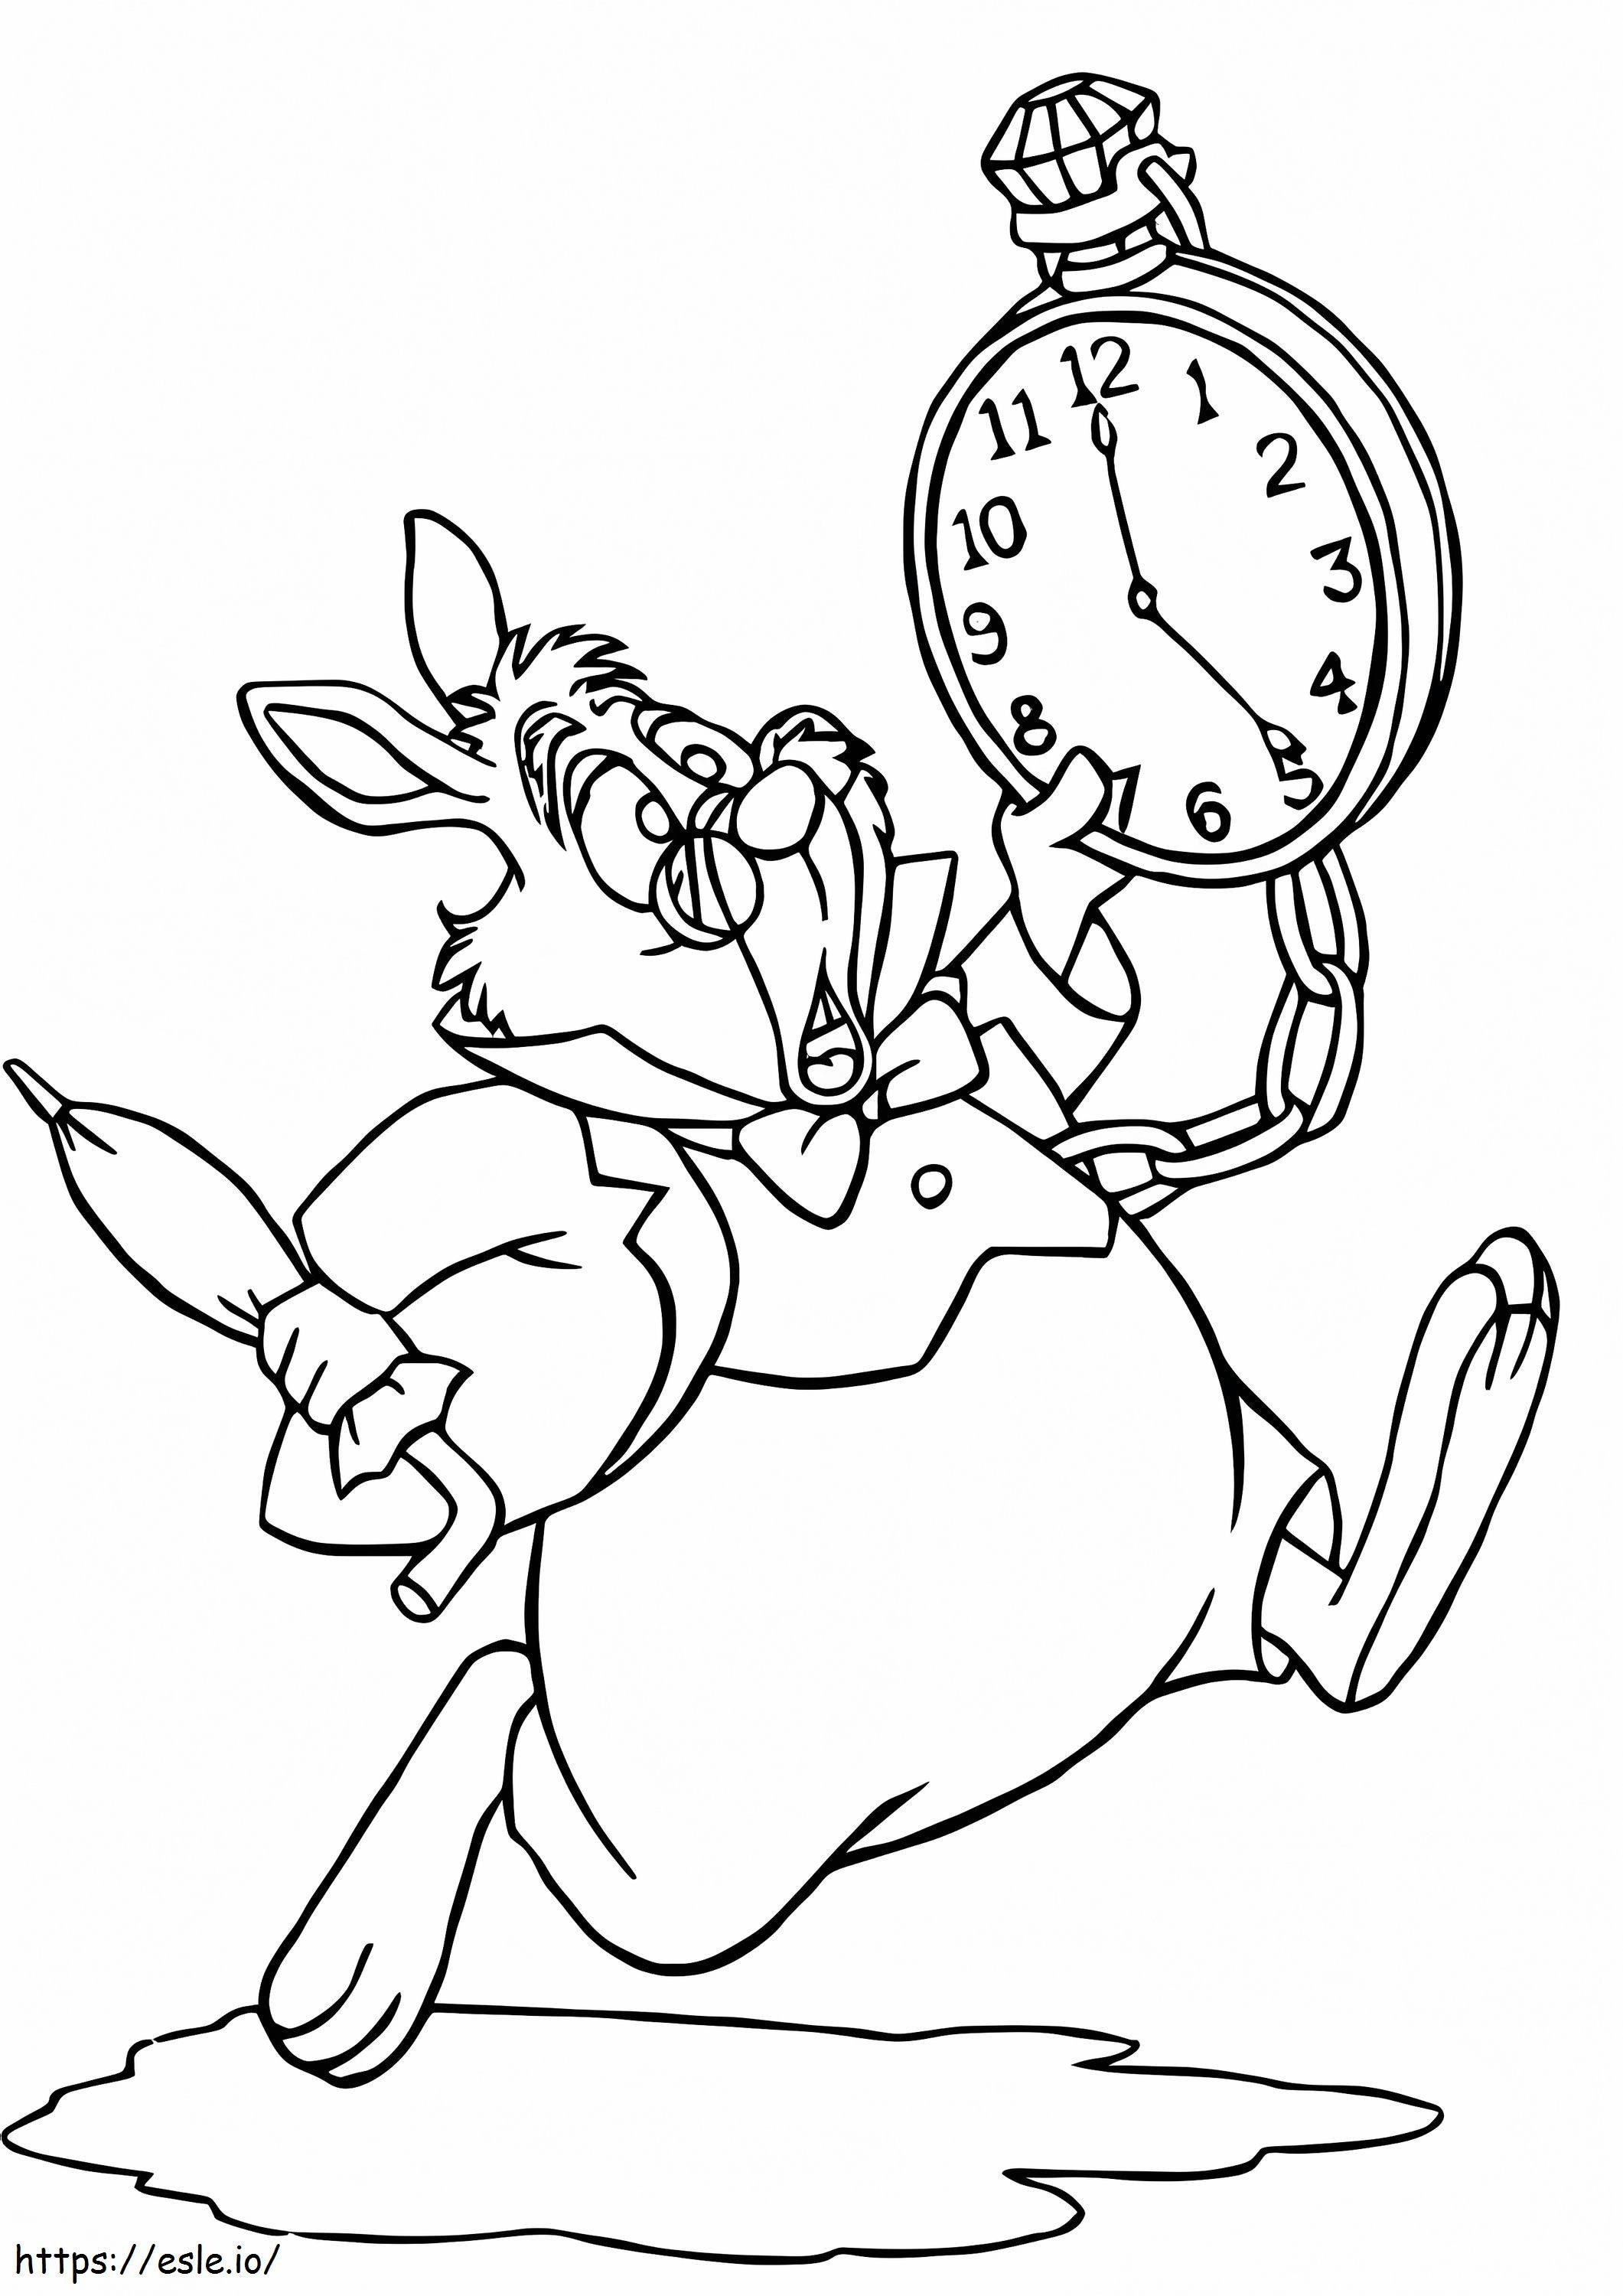 Cartoon Rabbit Holding Clock coloring page